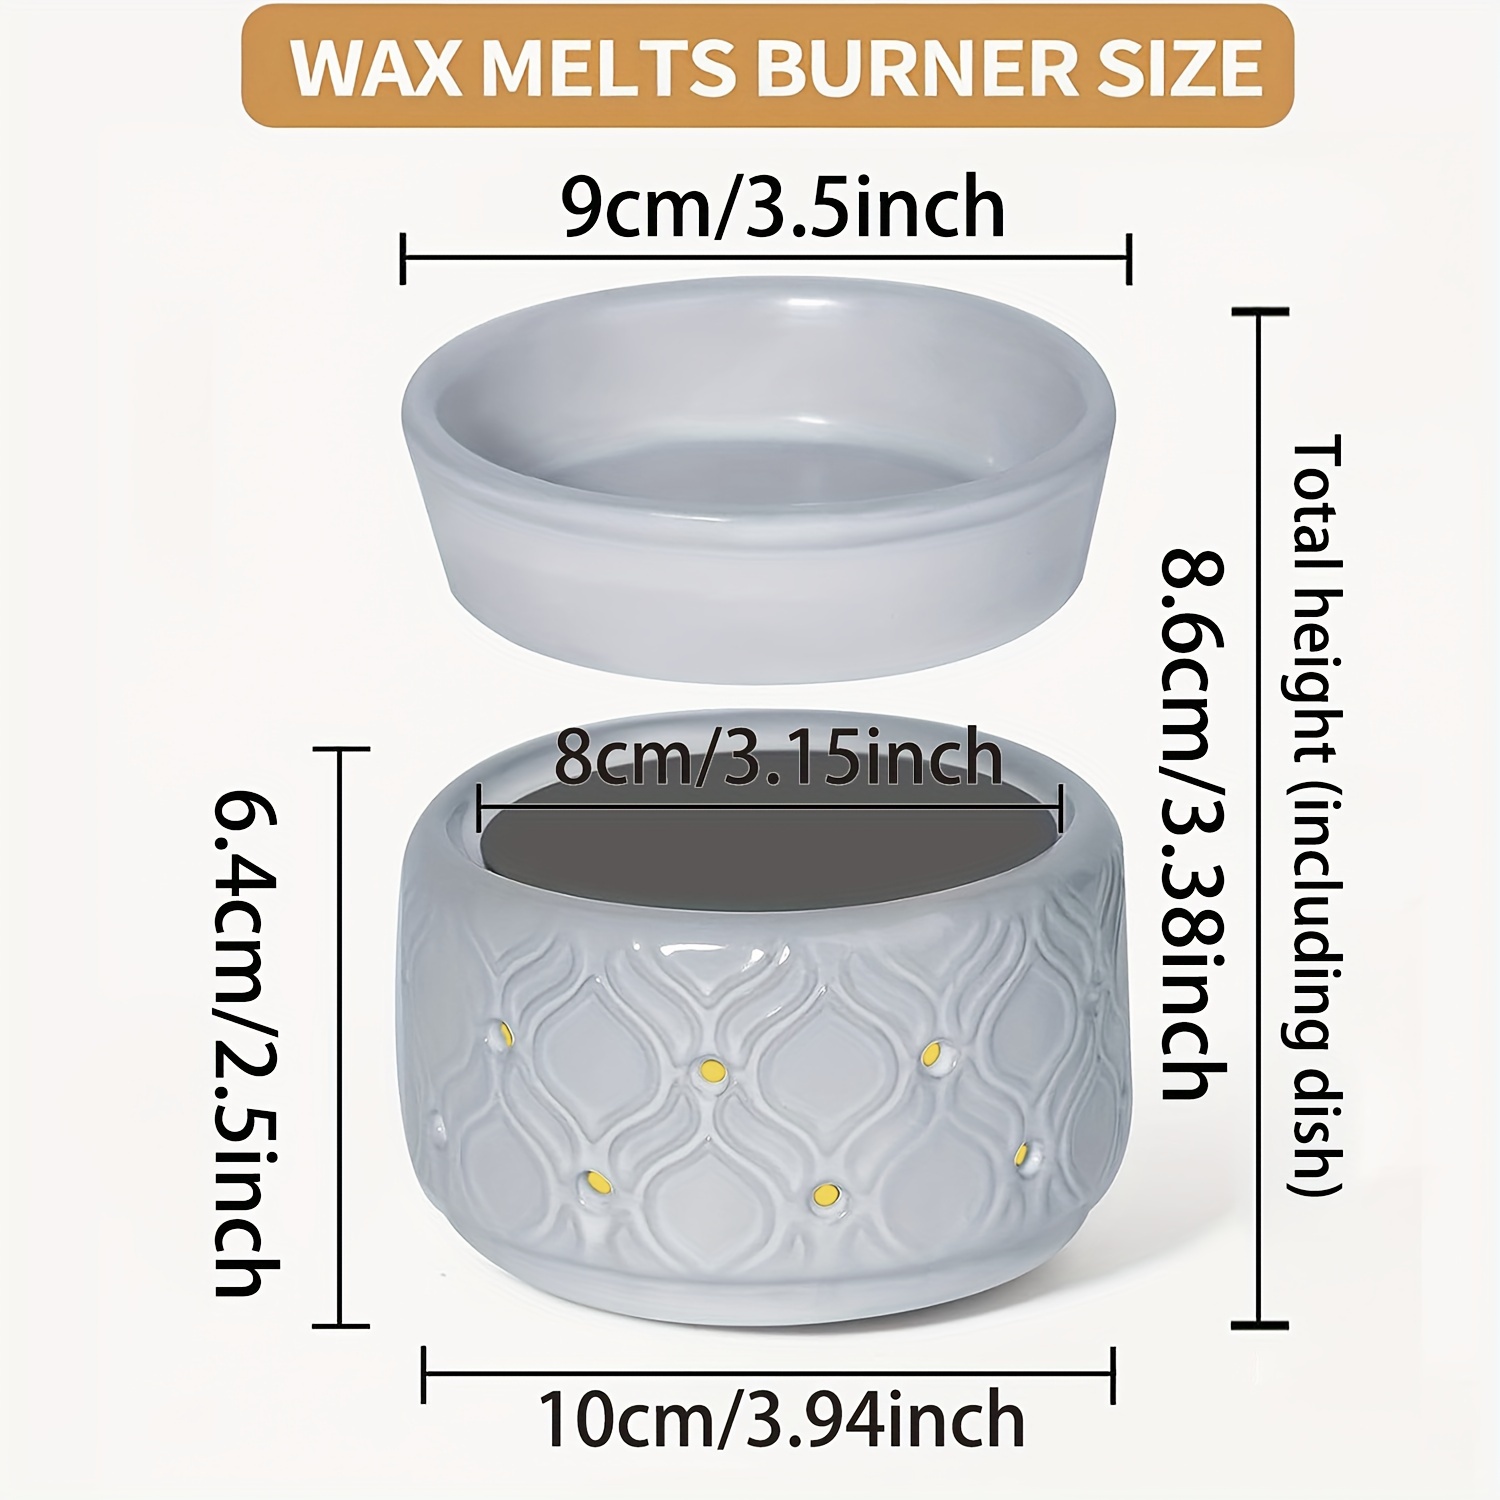 Wax Melt Burner